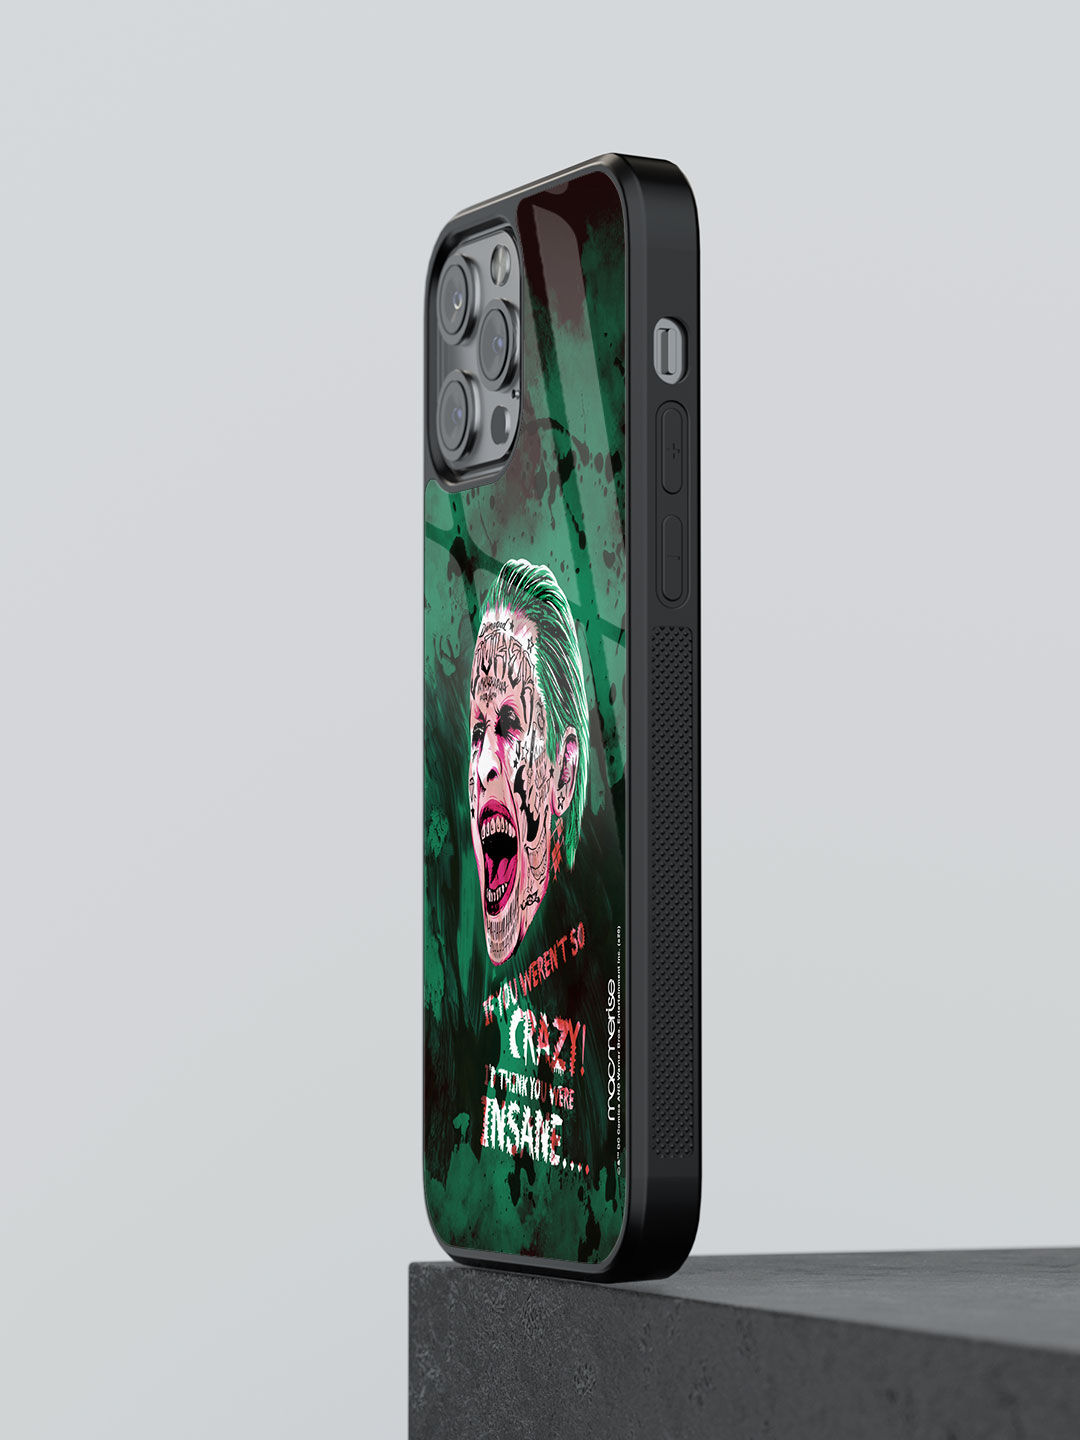 Crazy Insane Joker - Glass Case For iPhone 13 Pro Max